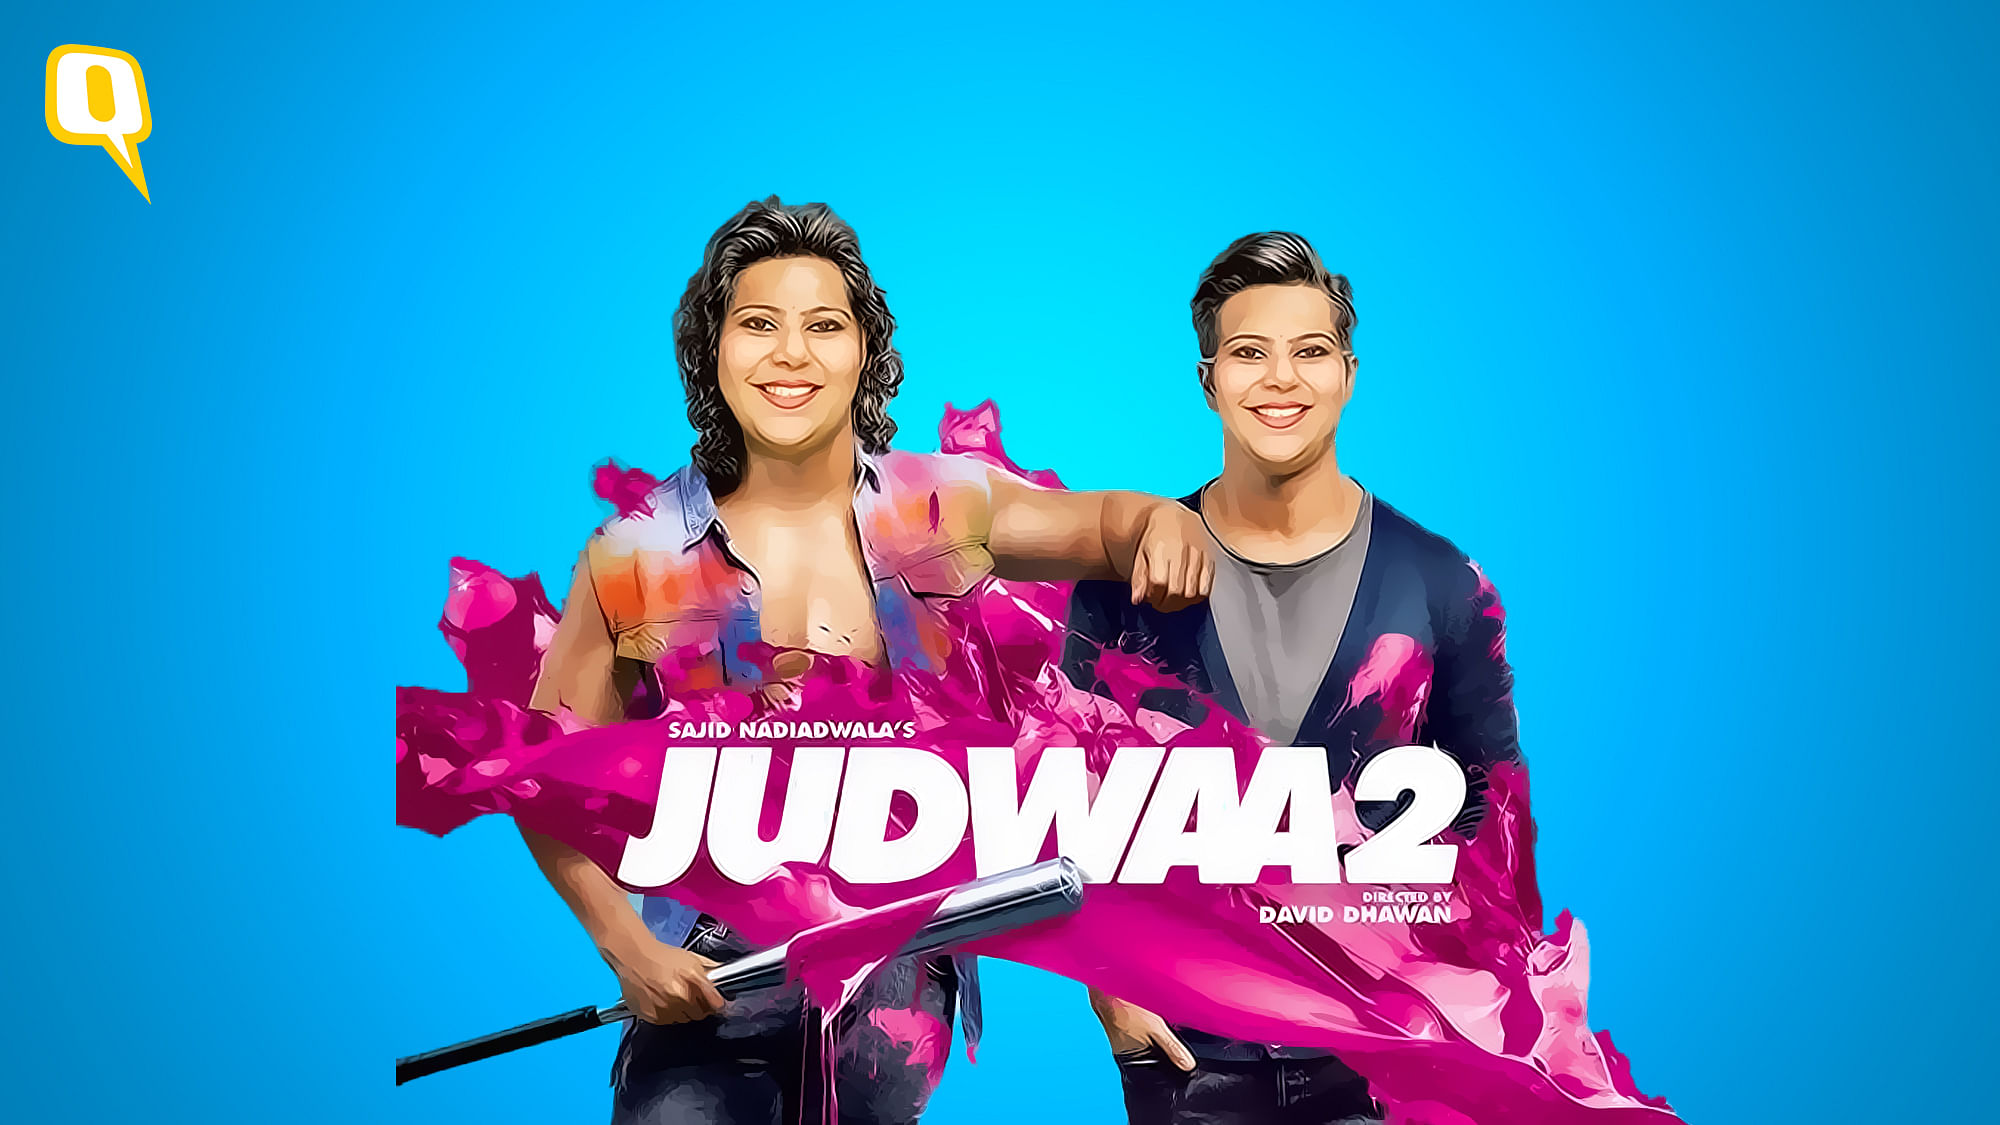 Why watch Judwaa 2 when you can simply replay the original?